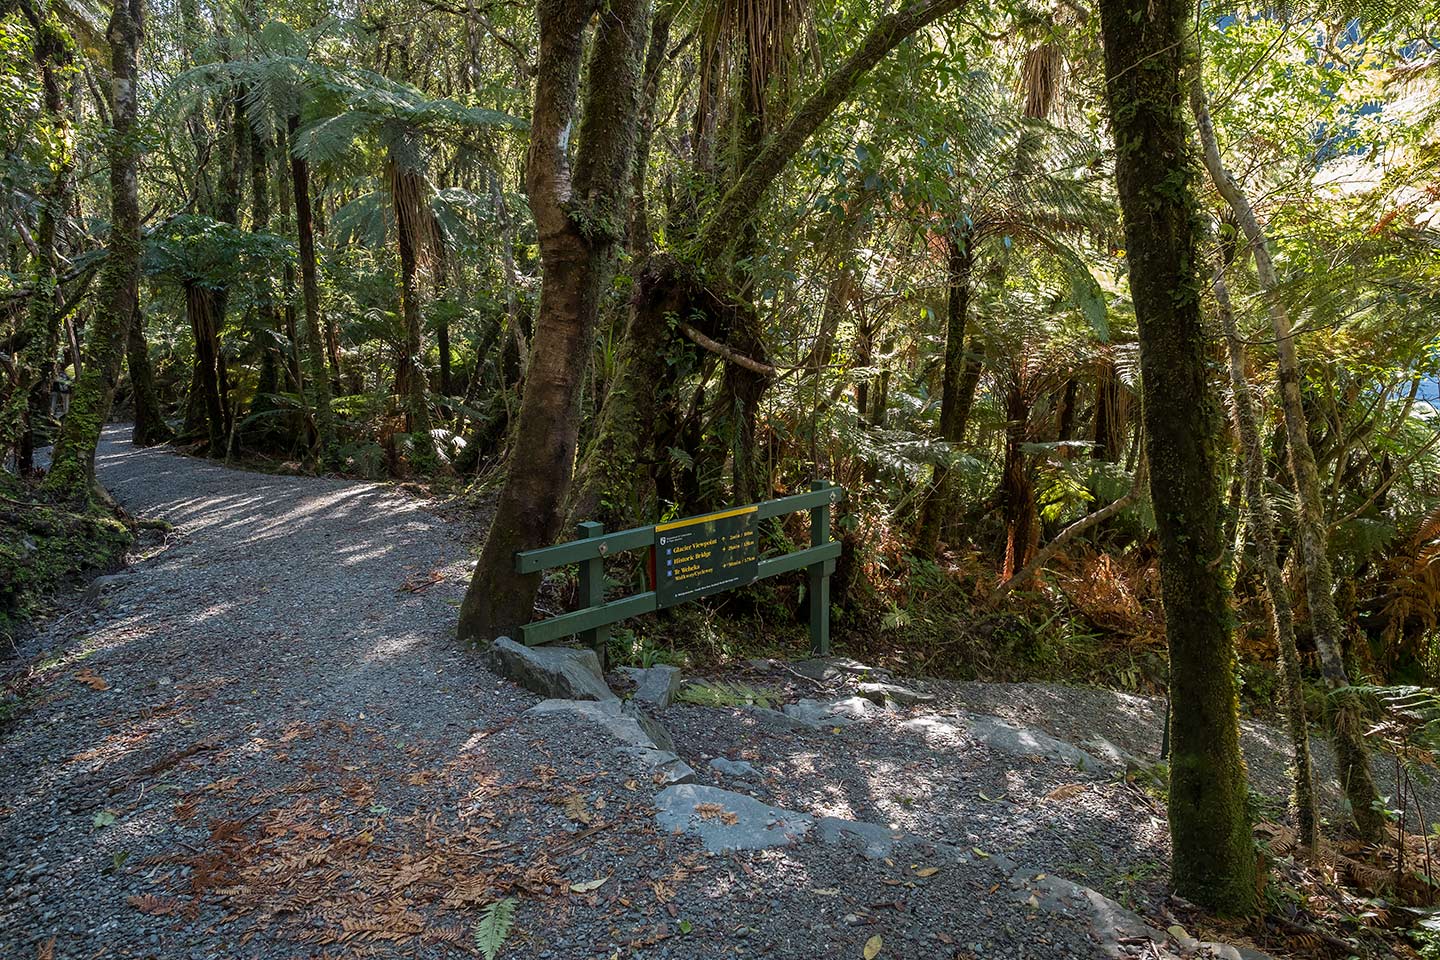 River Walk Track Viewpoint, Westland Tai Poutini National Park, New Zealand